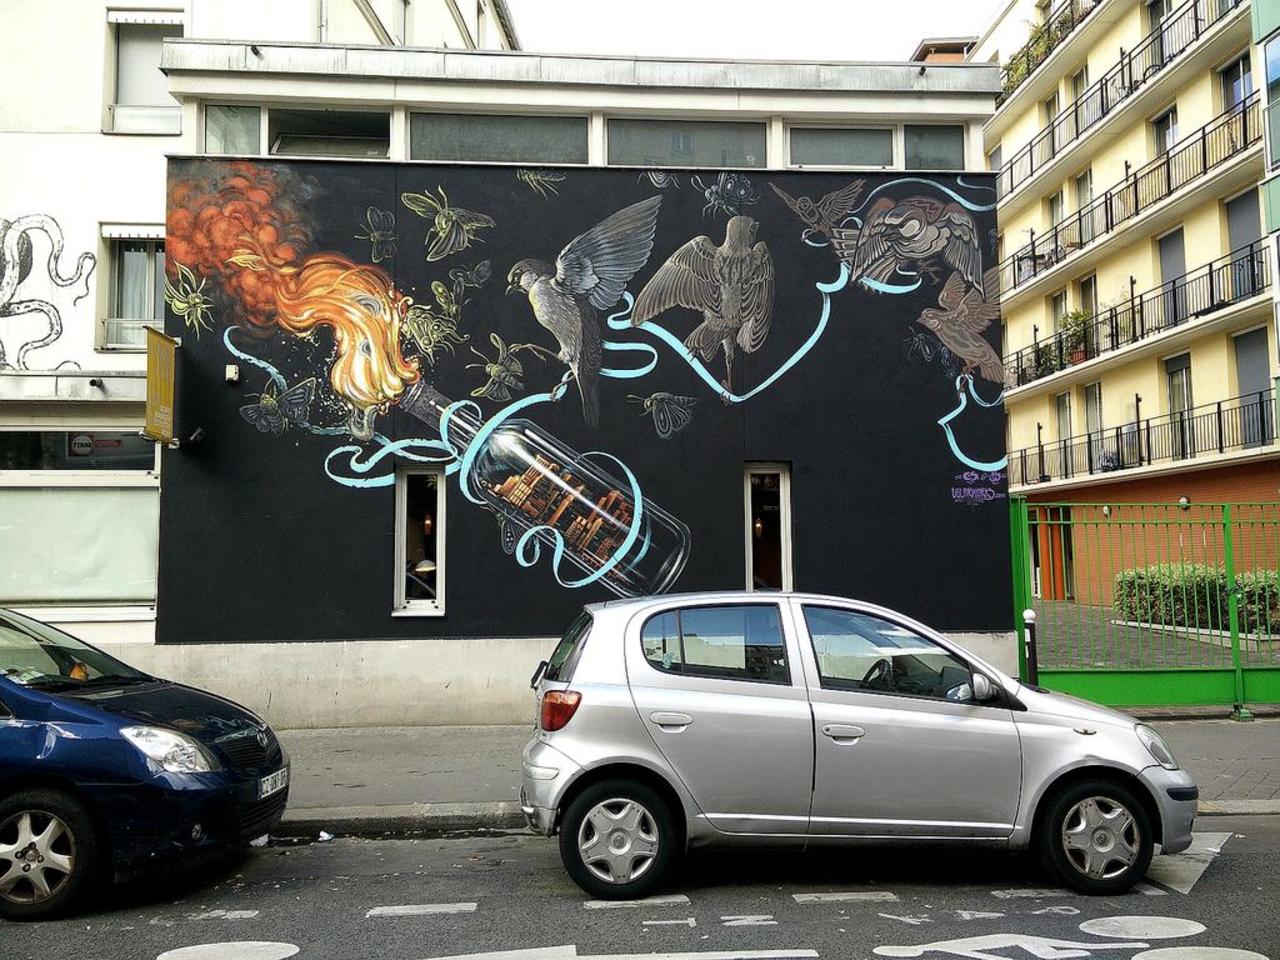 Street Art by UGLAR in #Paris http://www.urbacolors.com #art #mural #graffiti #streetart http://t.co/12jCknOBAR